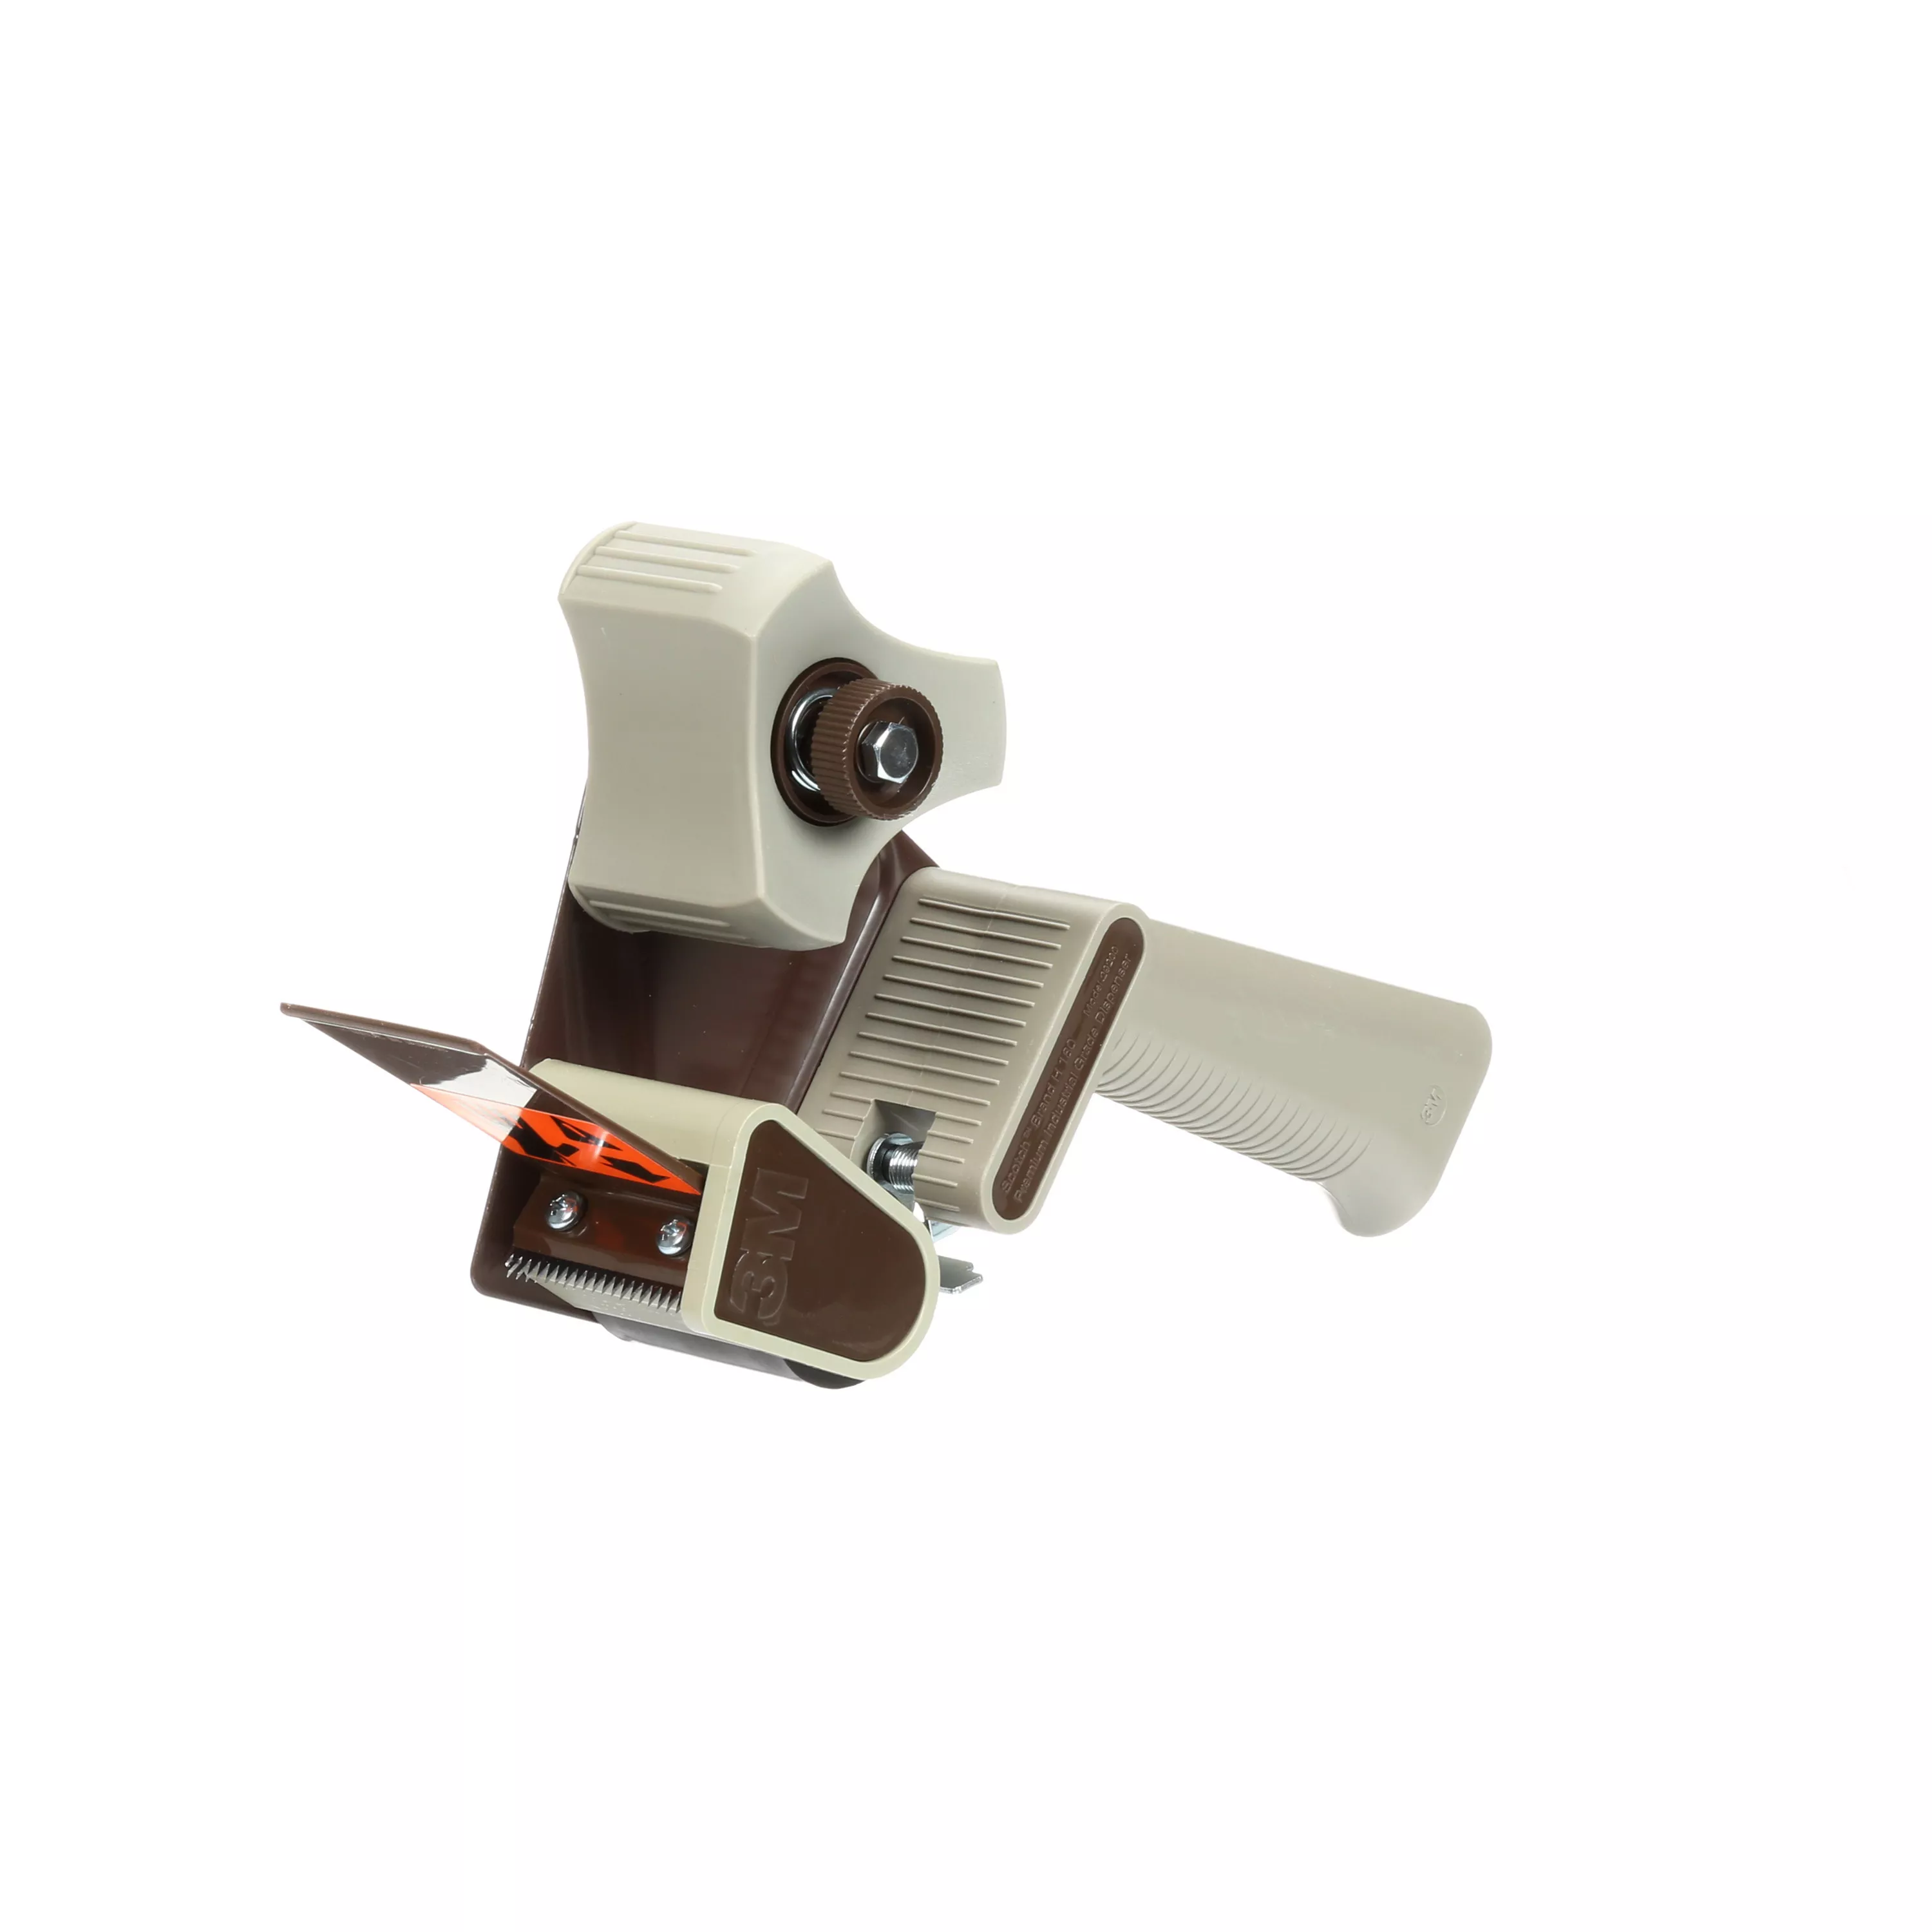 SKU 7000148741 | Scotch® Box Sealing Tape Hand Dispenser H180